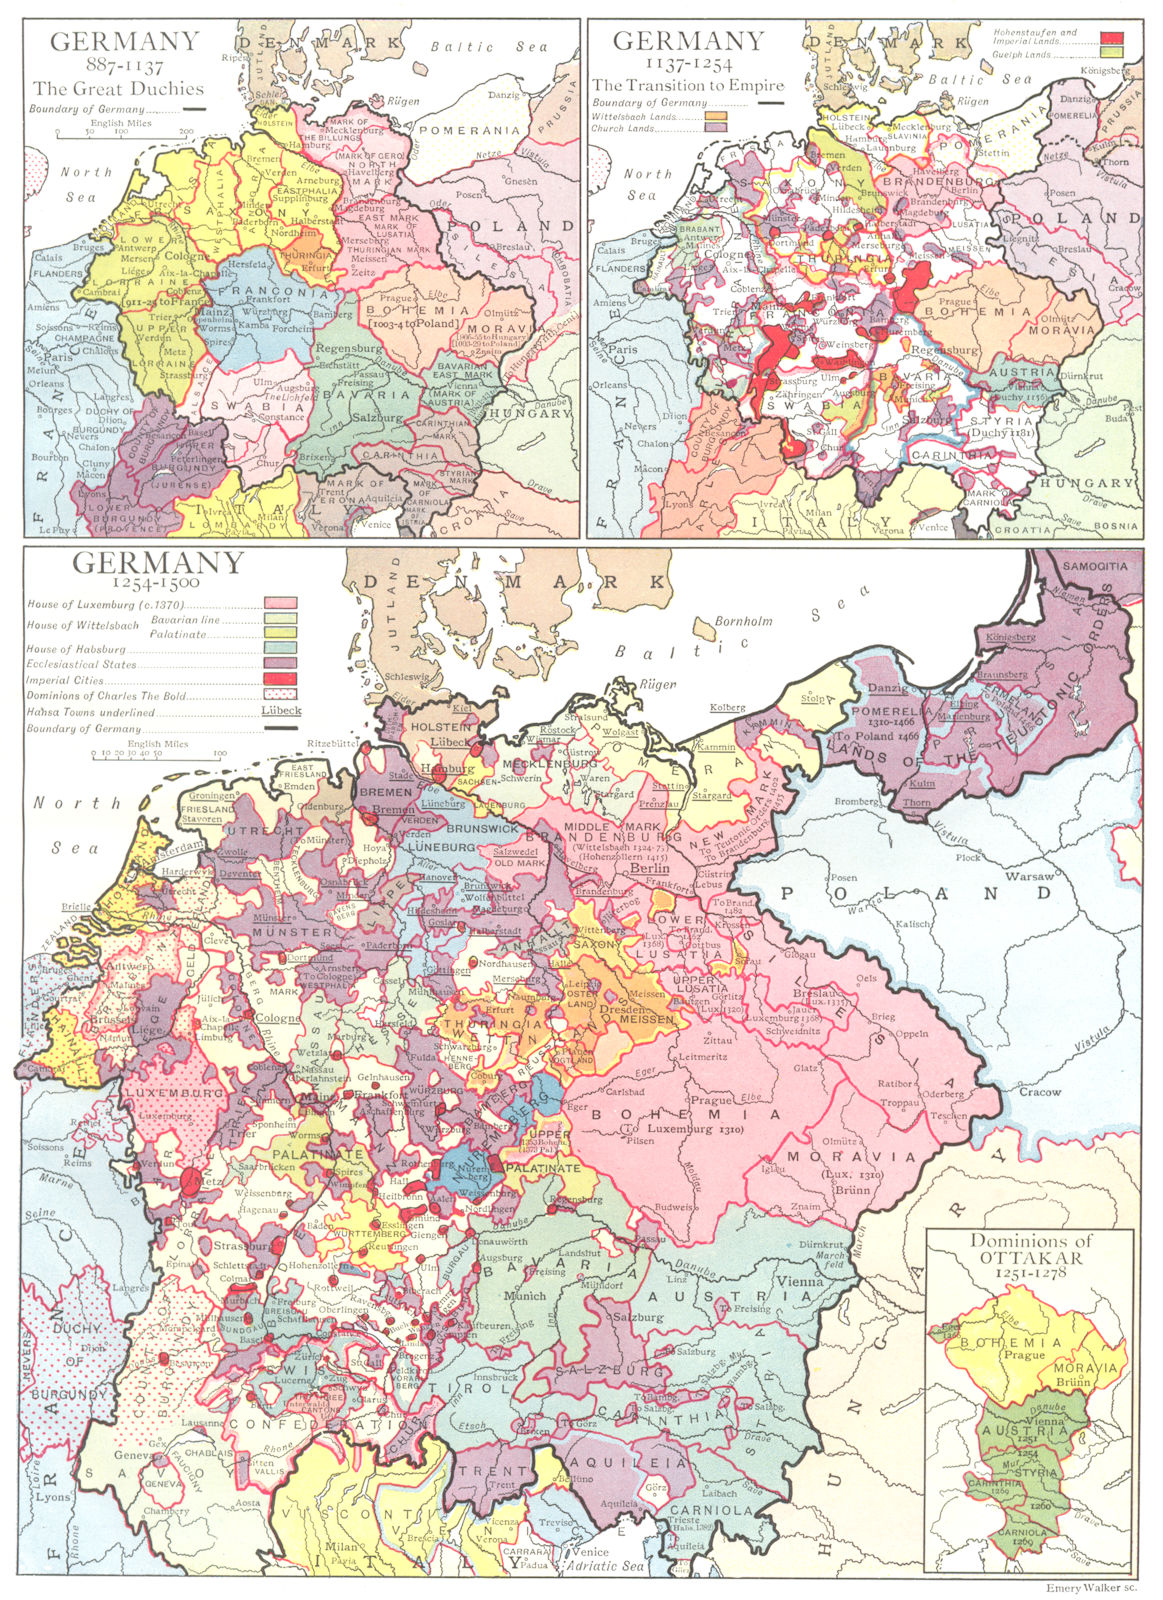 Associate Product GERMANY.887-1137 Duchies;-1254 Empire;-1500;Dominions Ottakar 1251-1278 1910 map